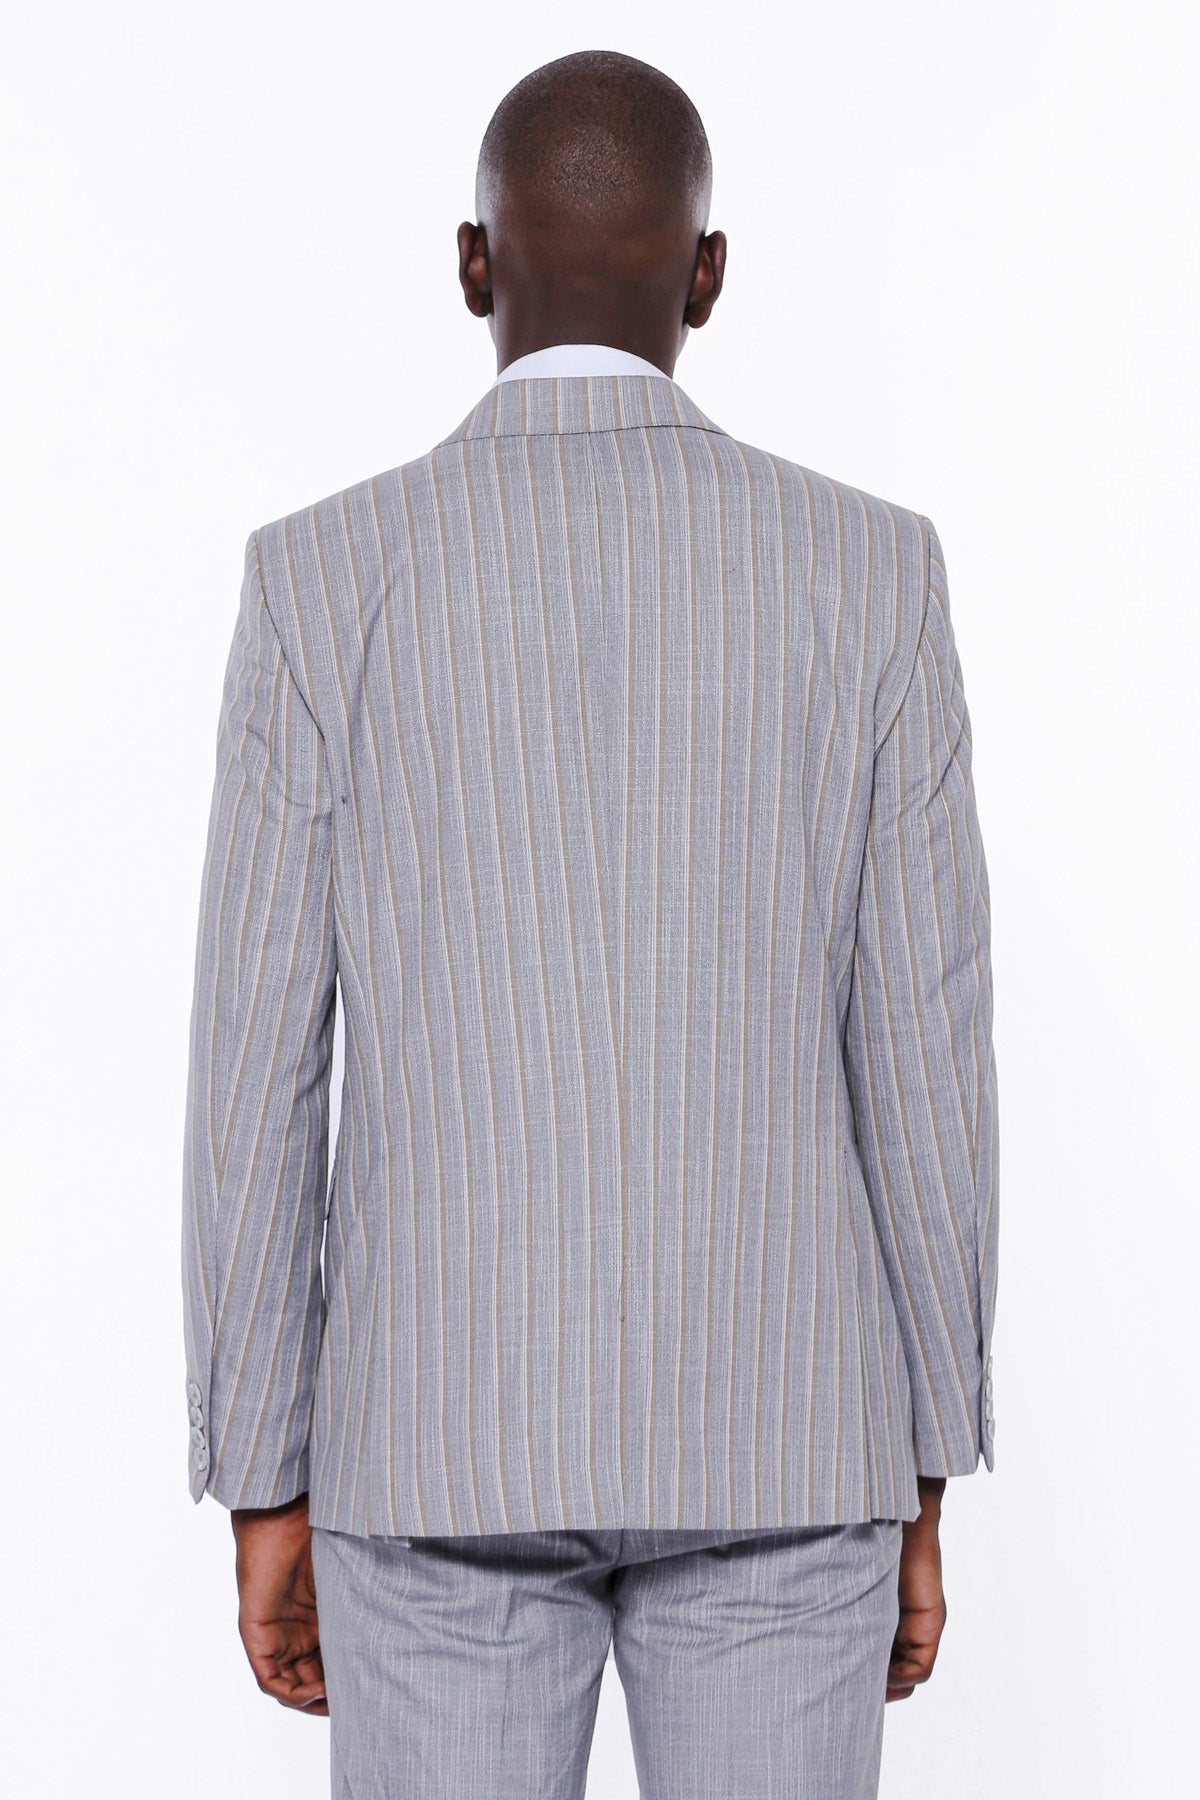 Grey Striped Suit 7